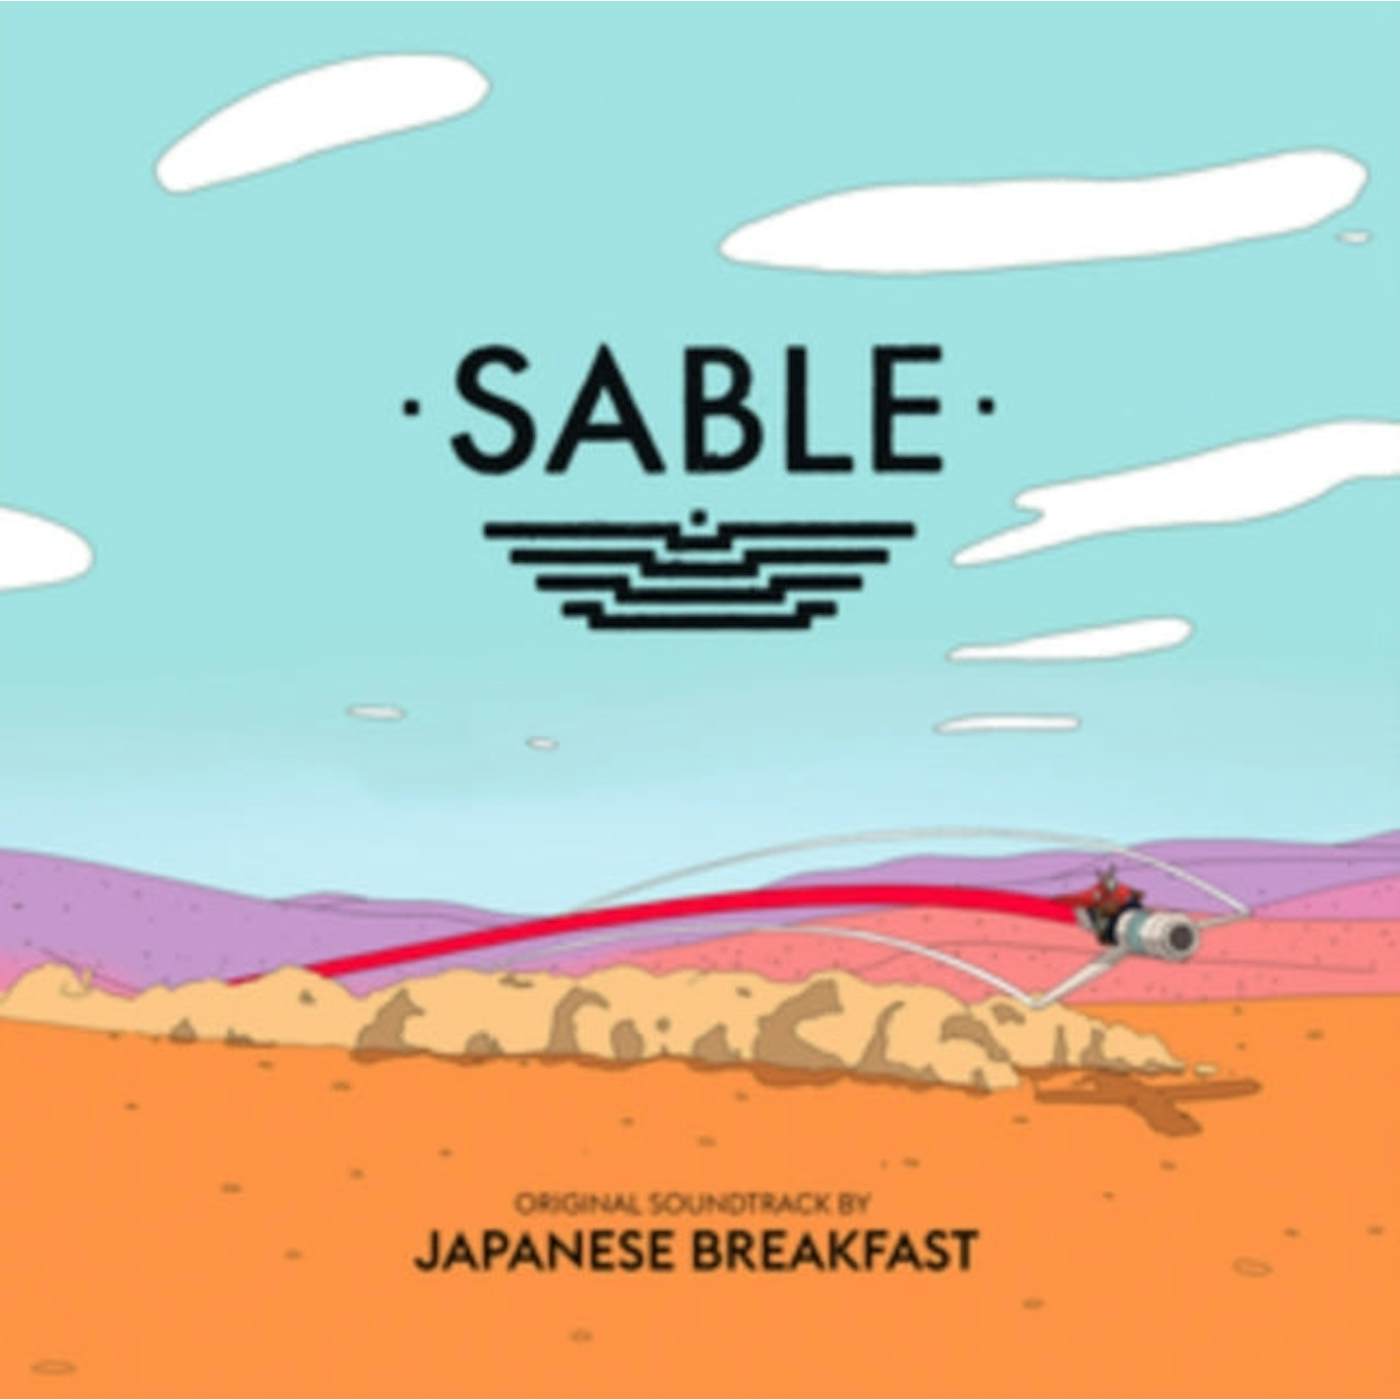 Japanese Breakfast LP Vinyl Record - Sable - Original Game Soundtrack